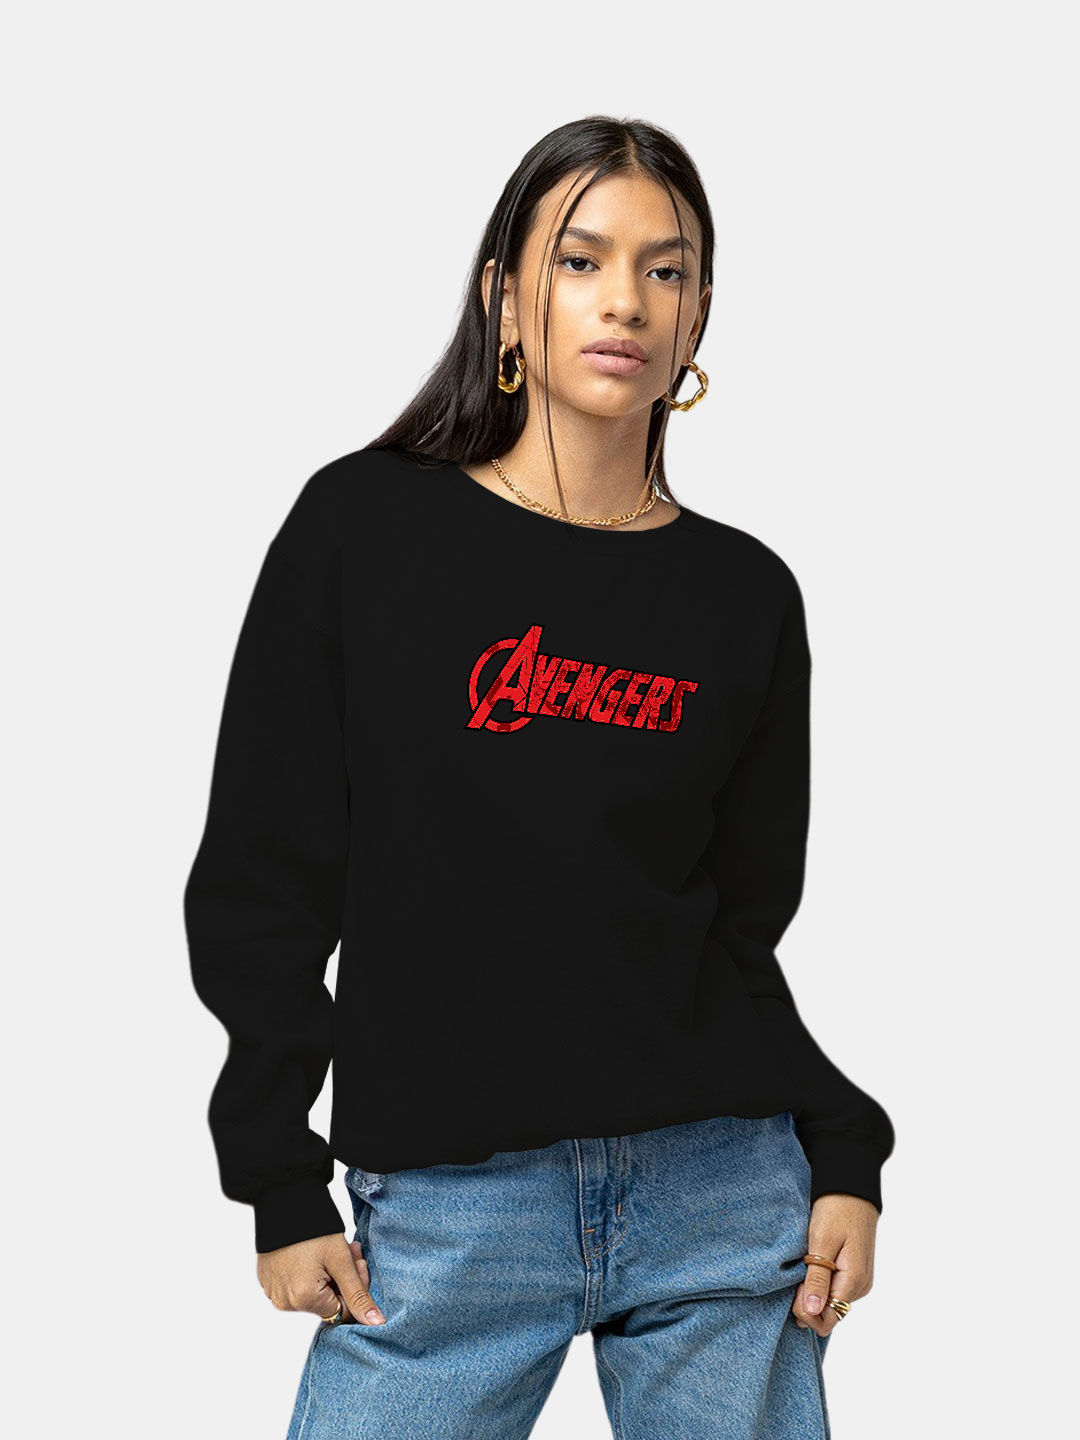 Buy Avenger Reveal - Female Designer Sweatshirt Sweatshirts Online